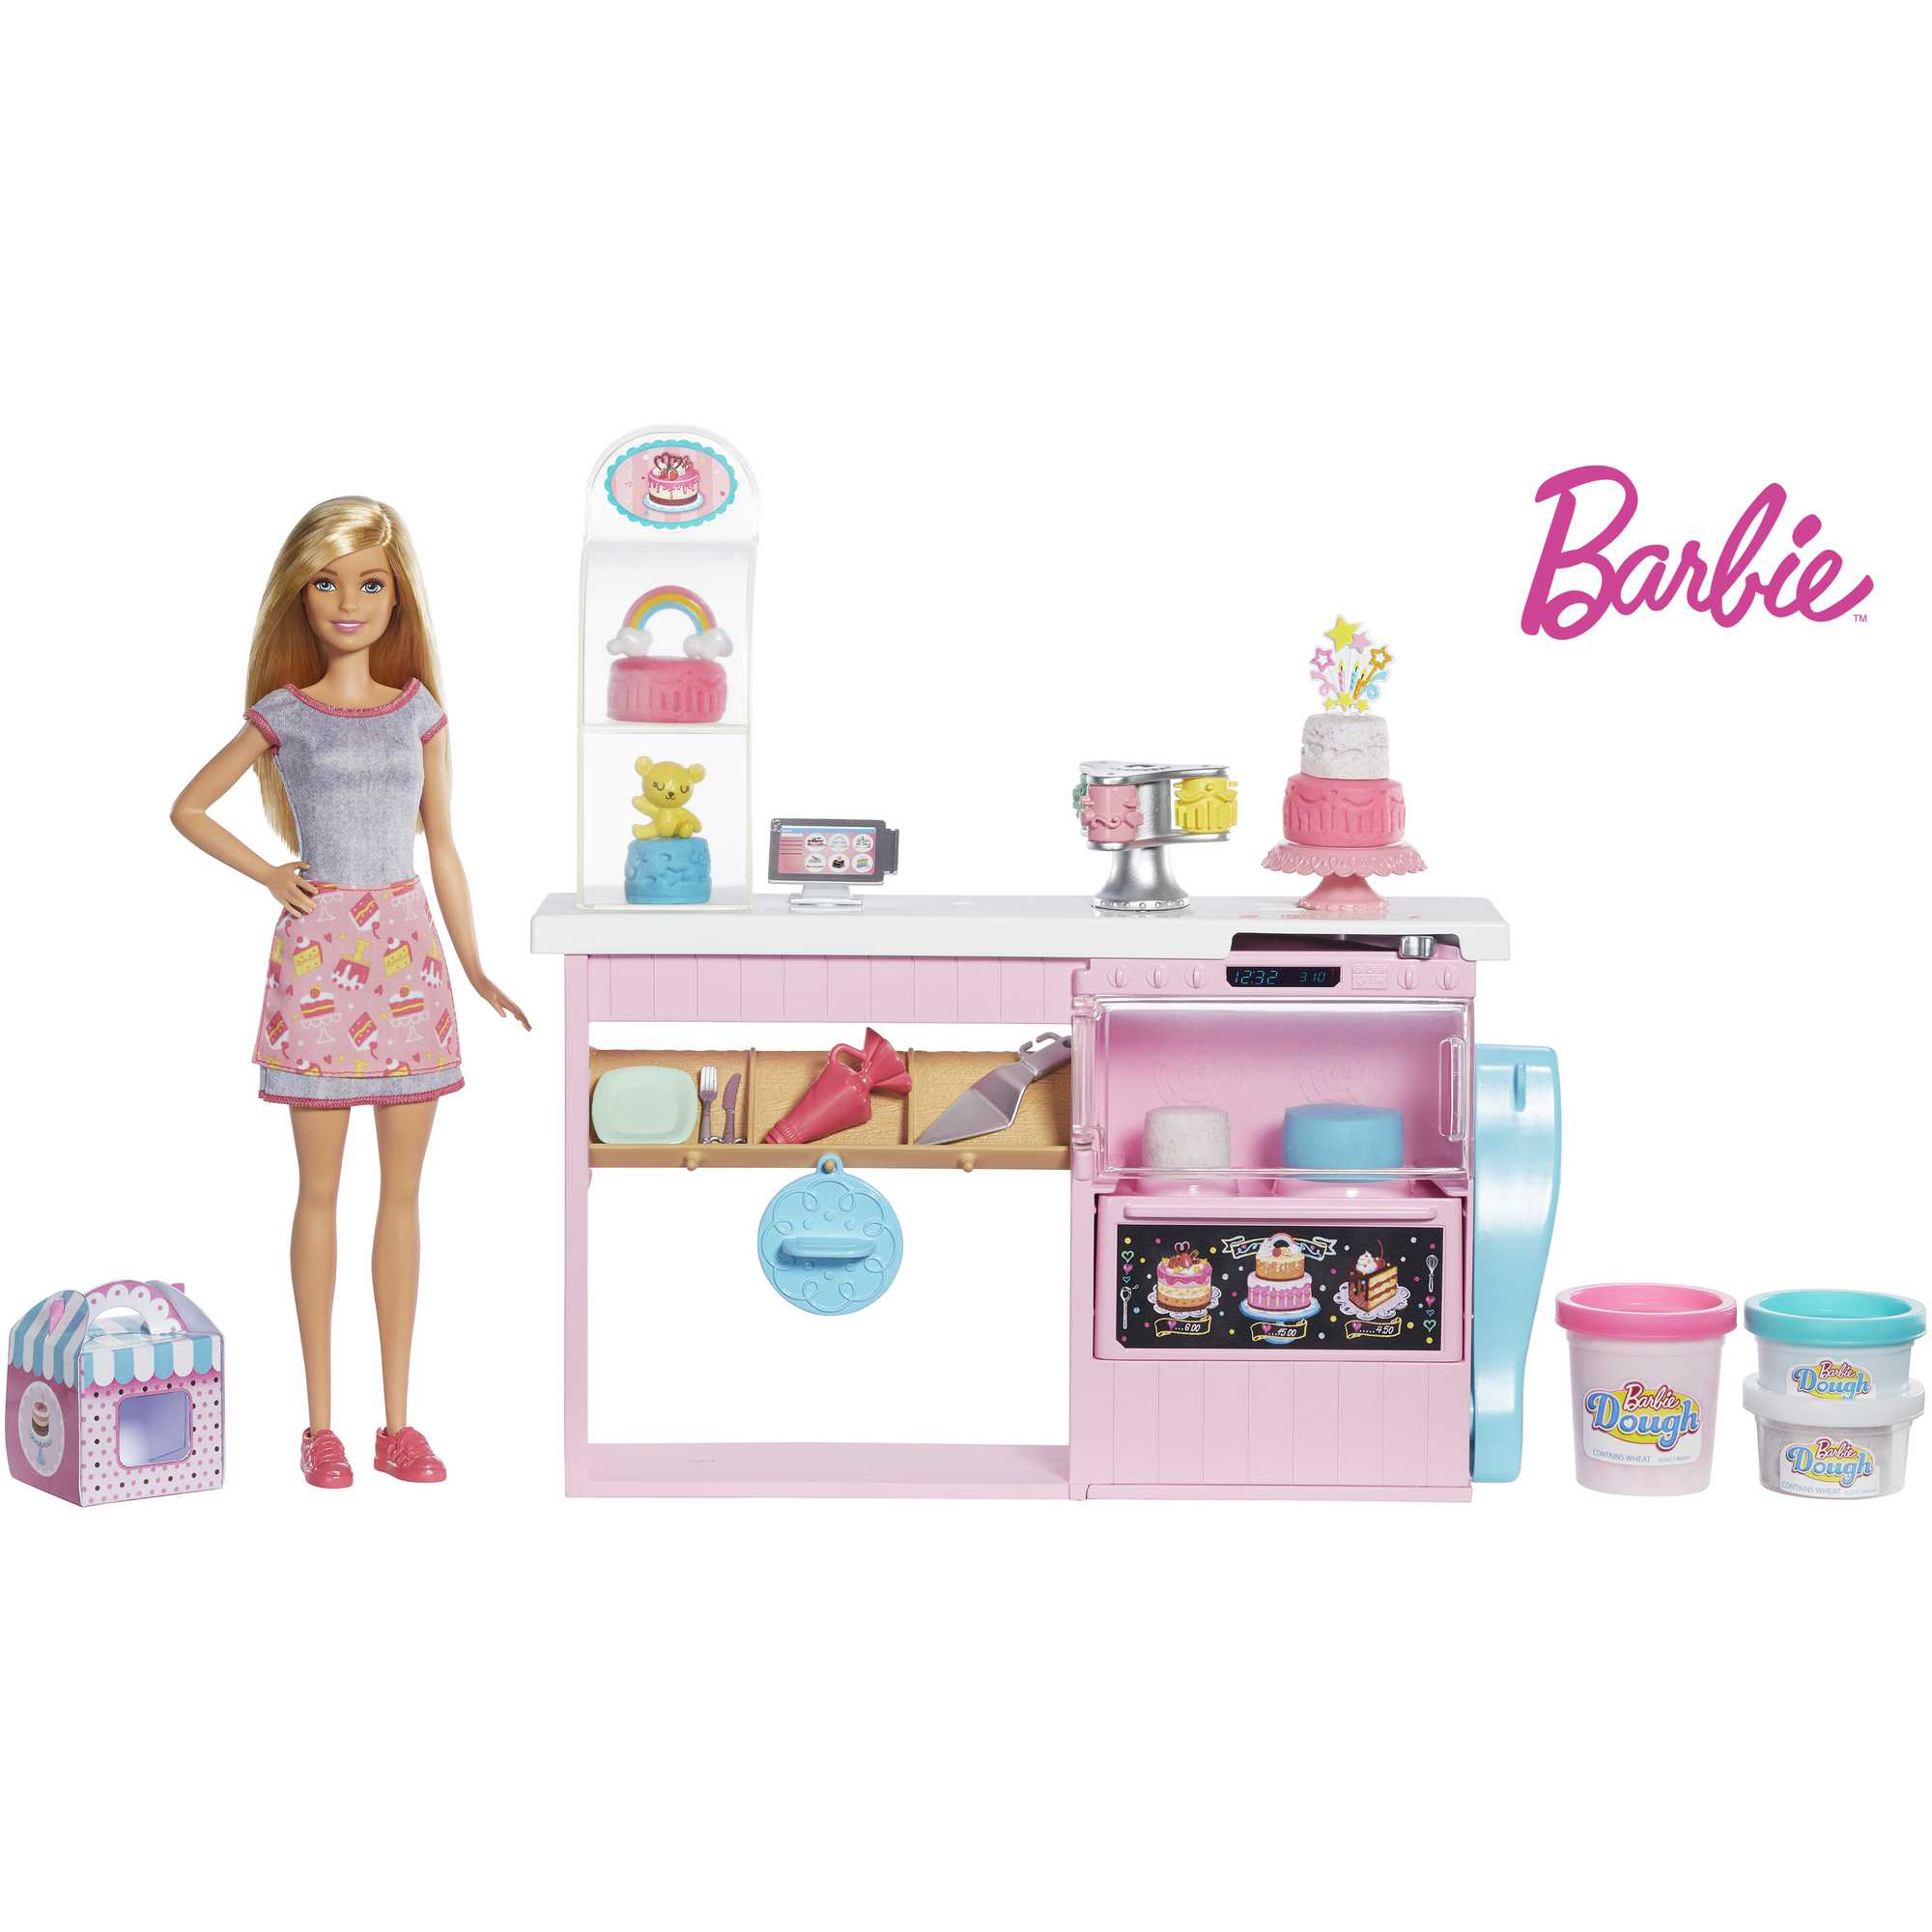 Barbie Playset Pasticceria con Bambola e Accessori da Cucina - Barbie